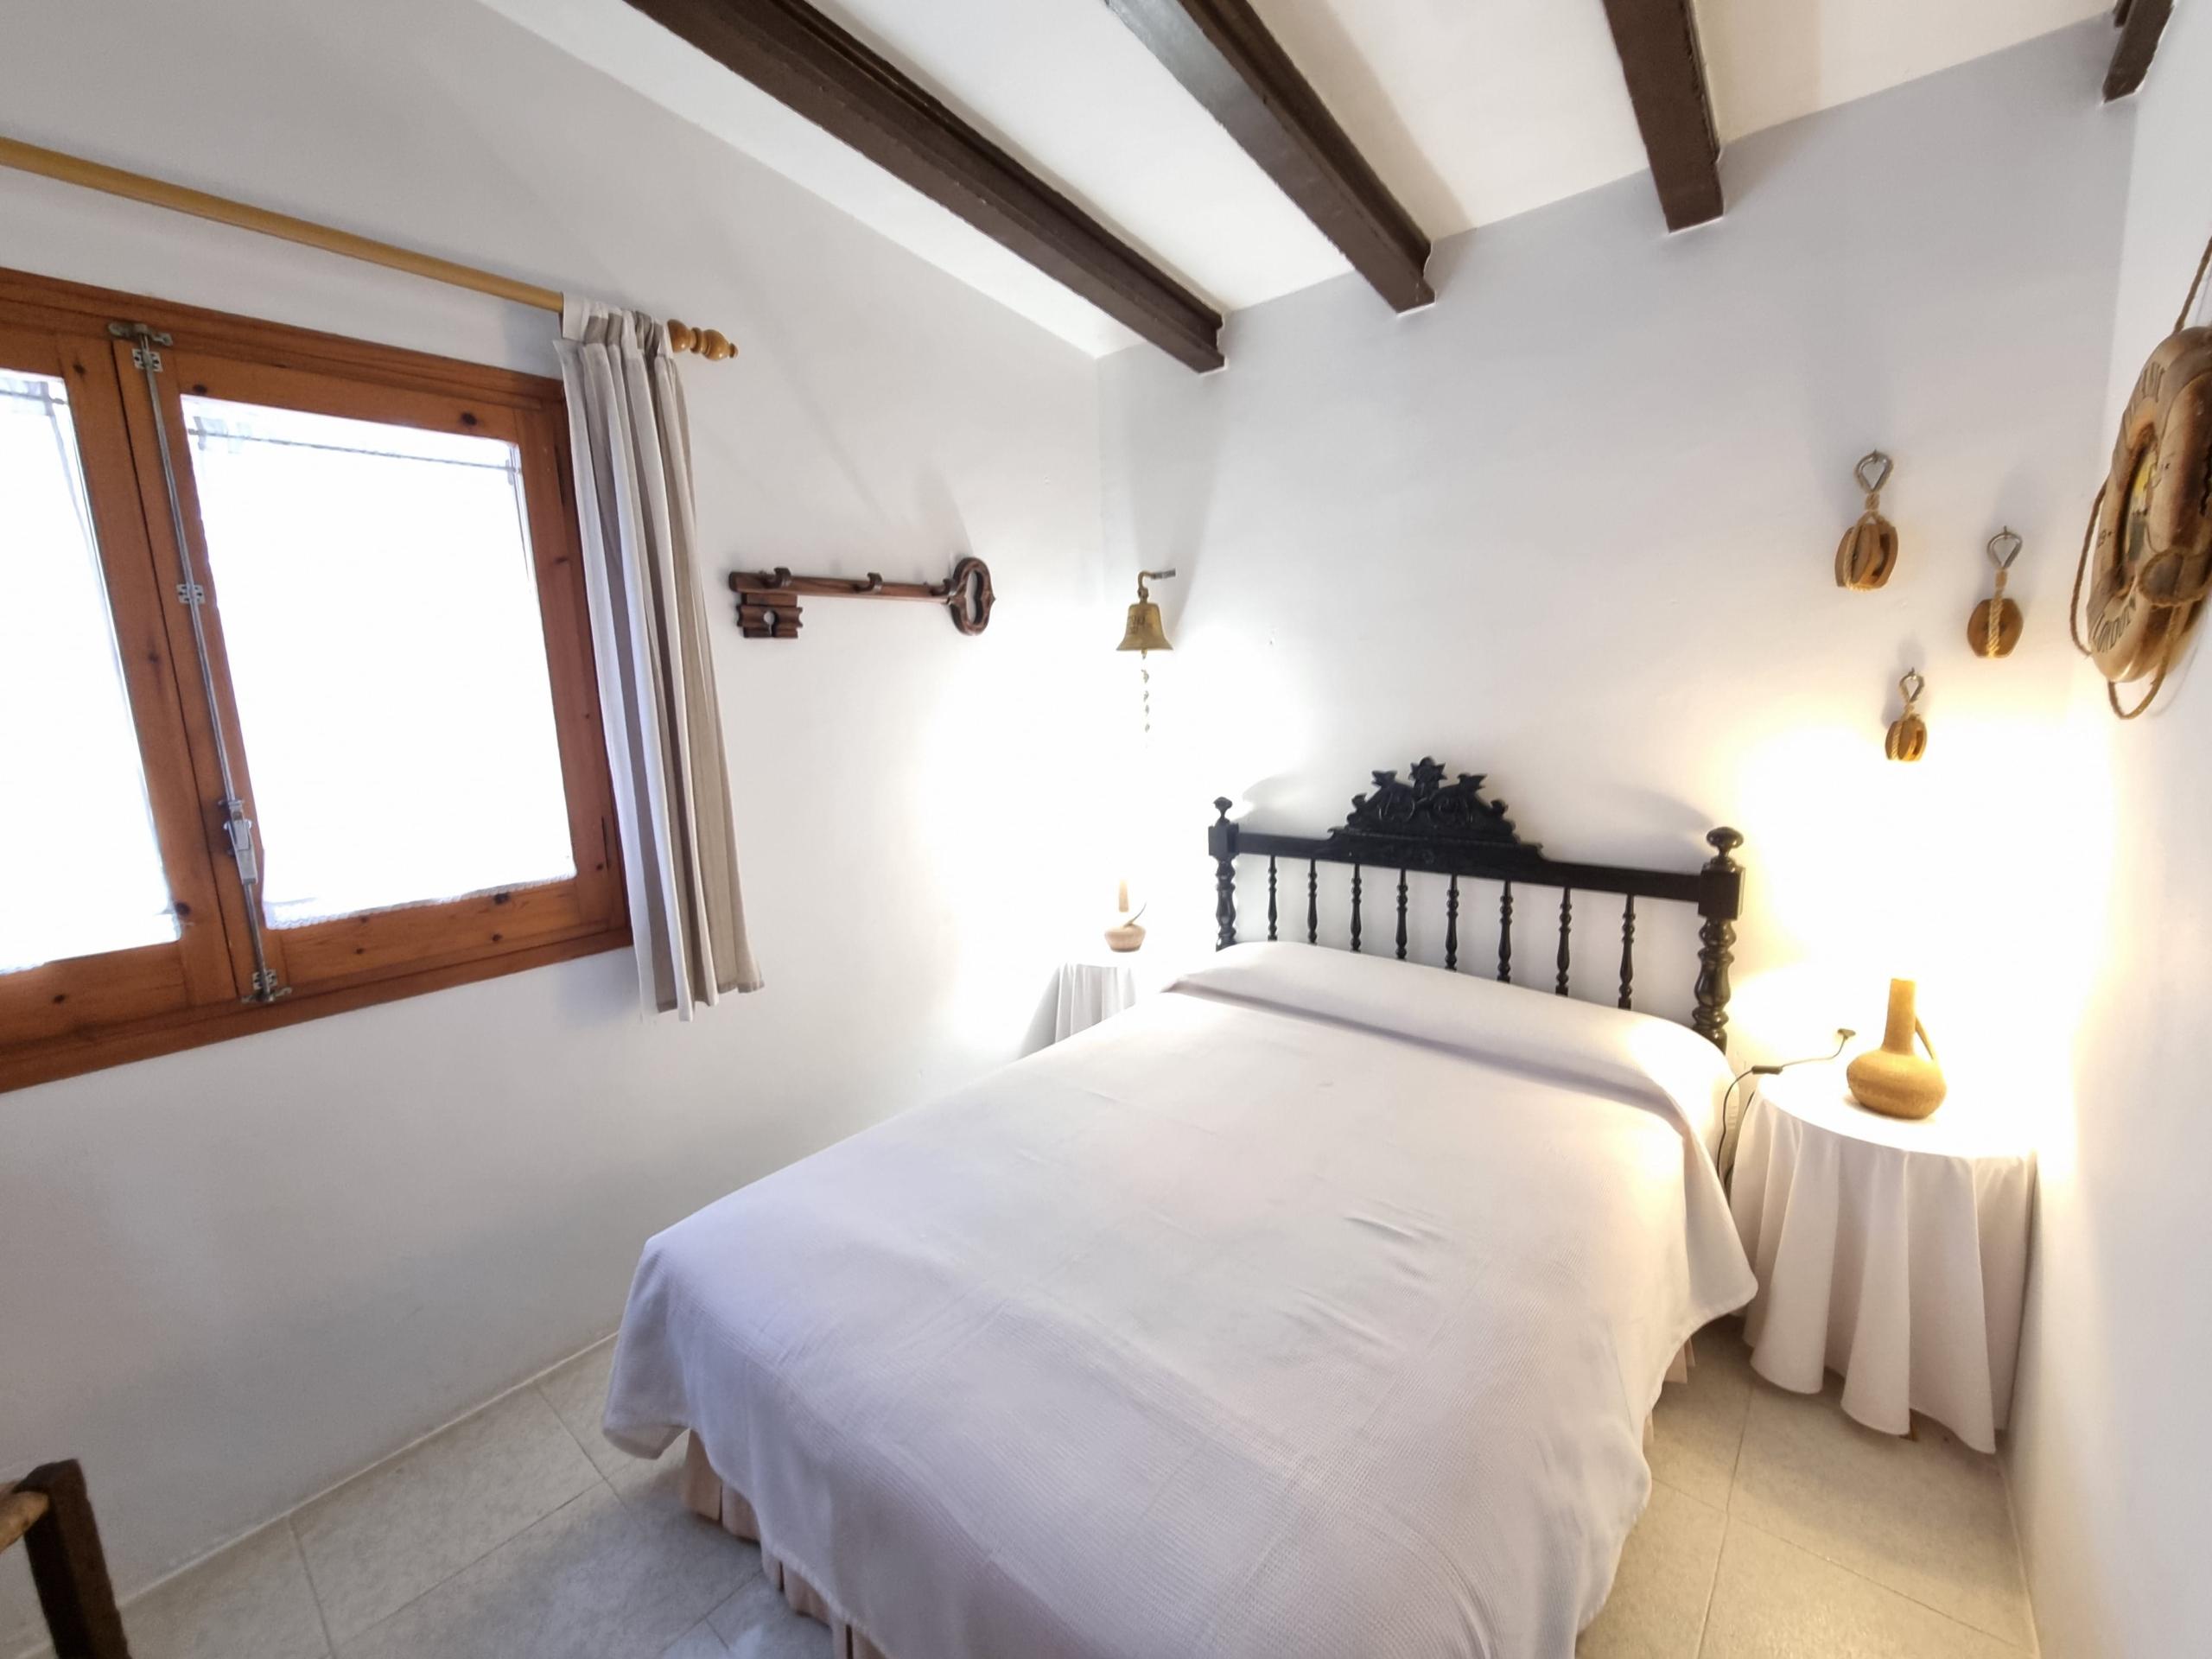 Rustic 5-bedrooms finca with HUTTE in l'Ametlla de Mar